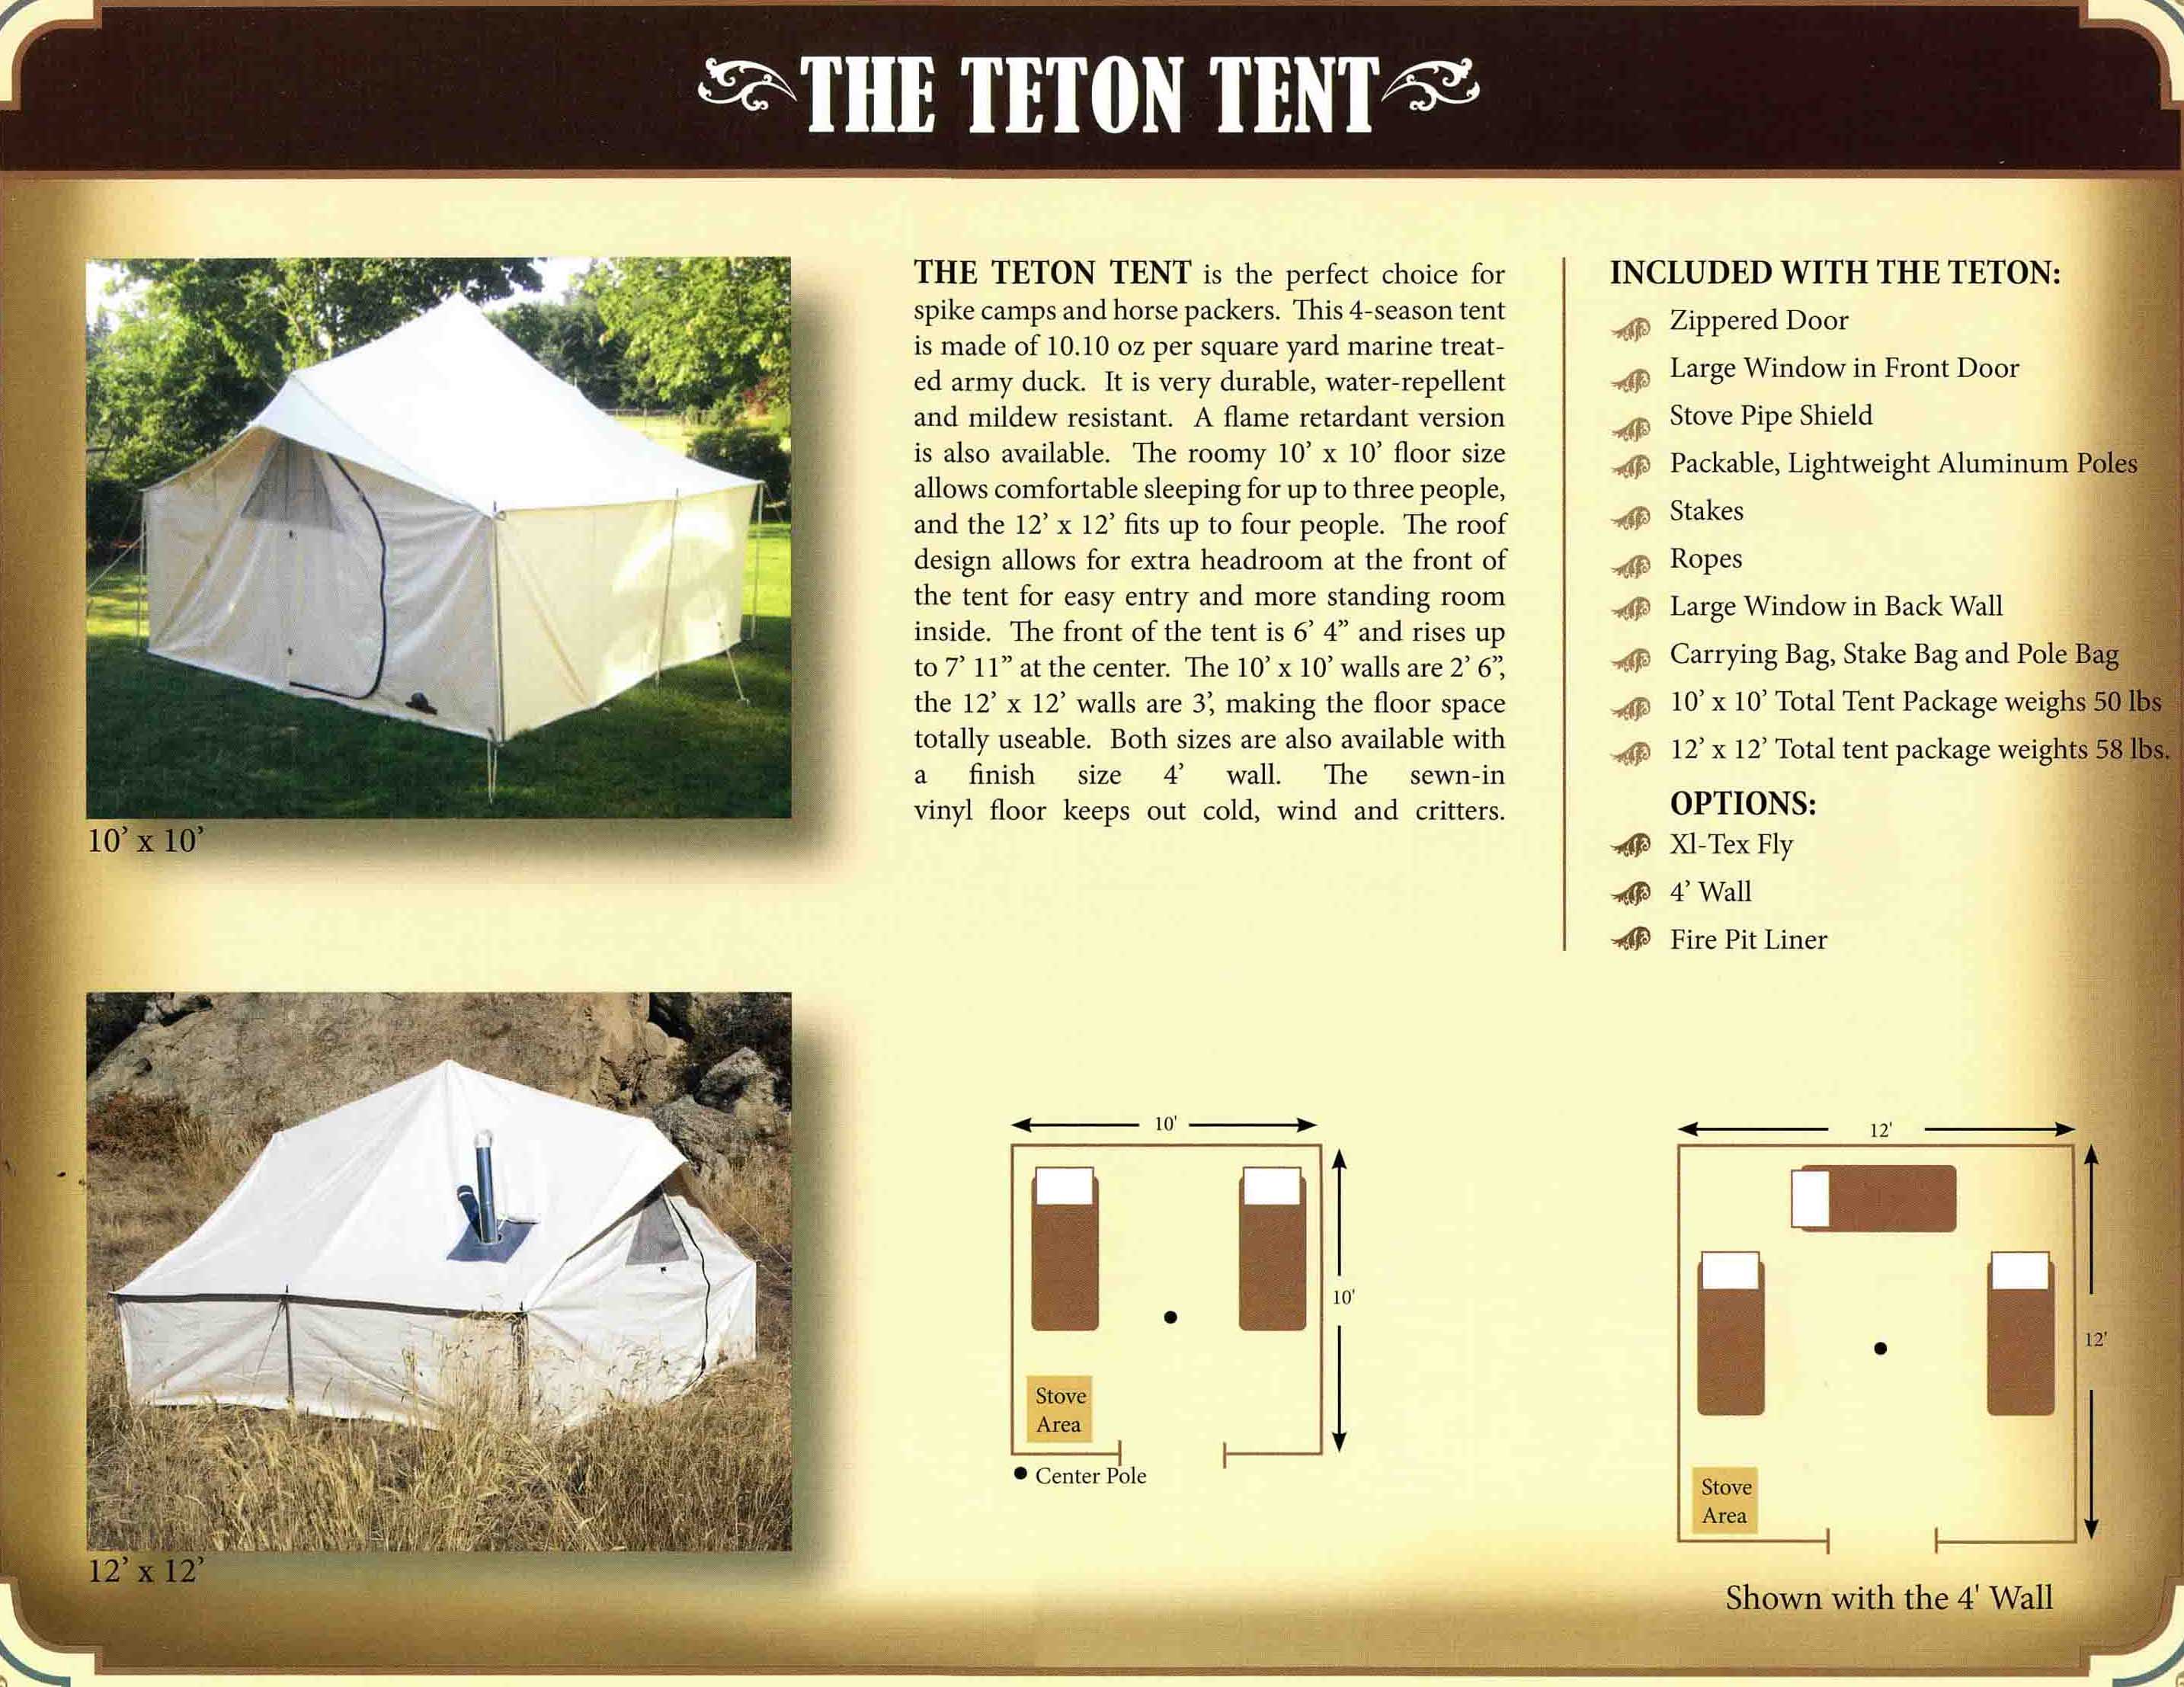 Tents/6TheTetontent007.jpg